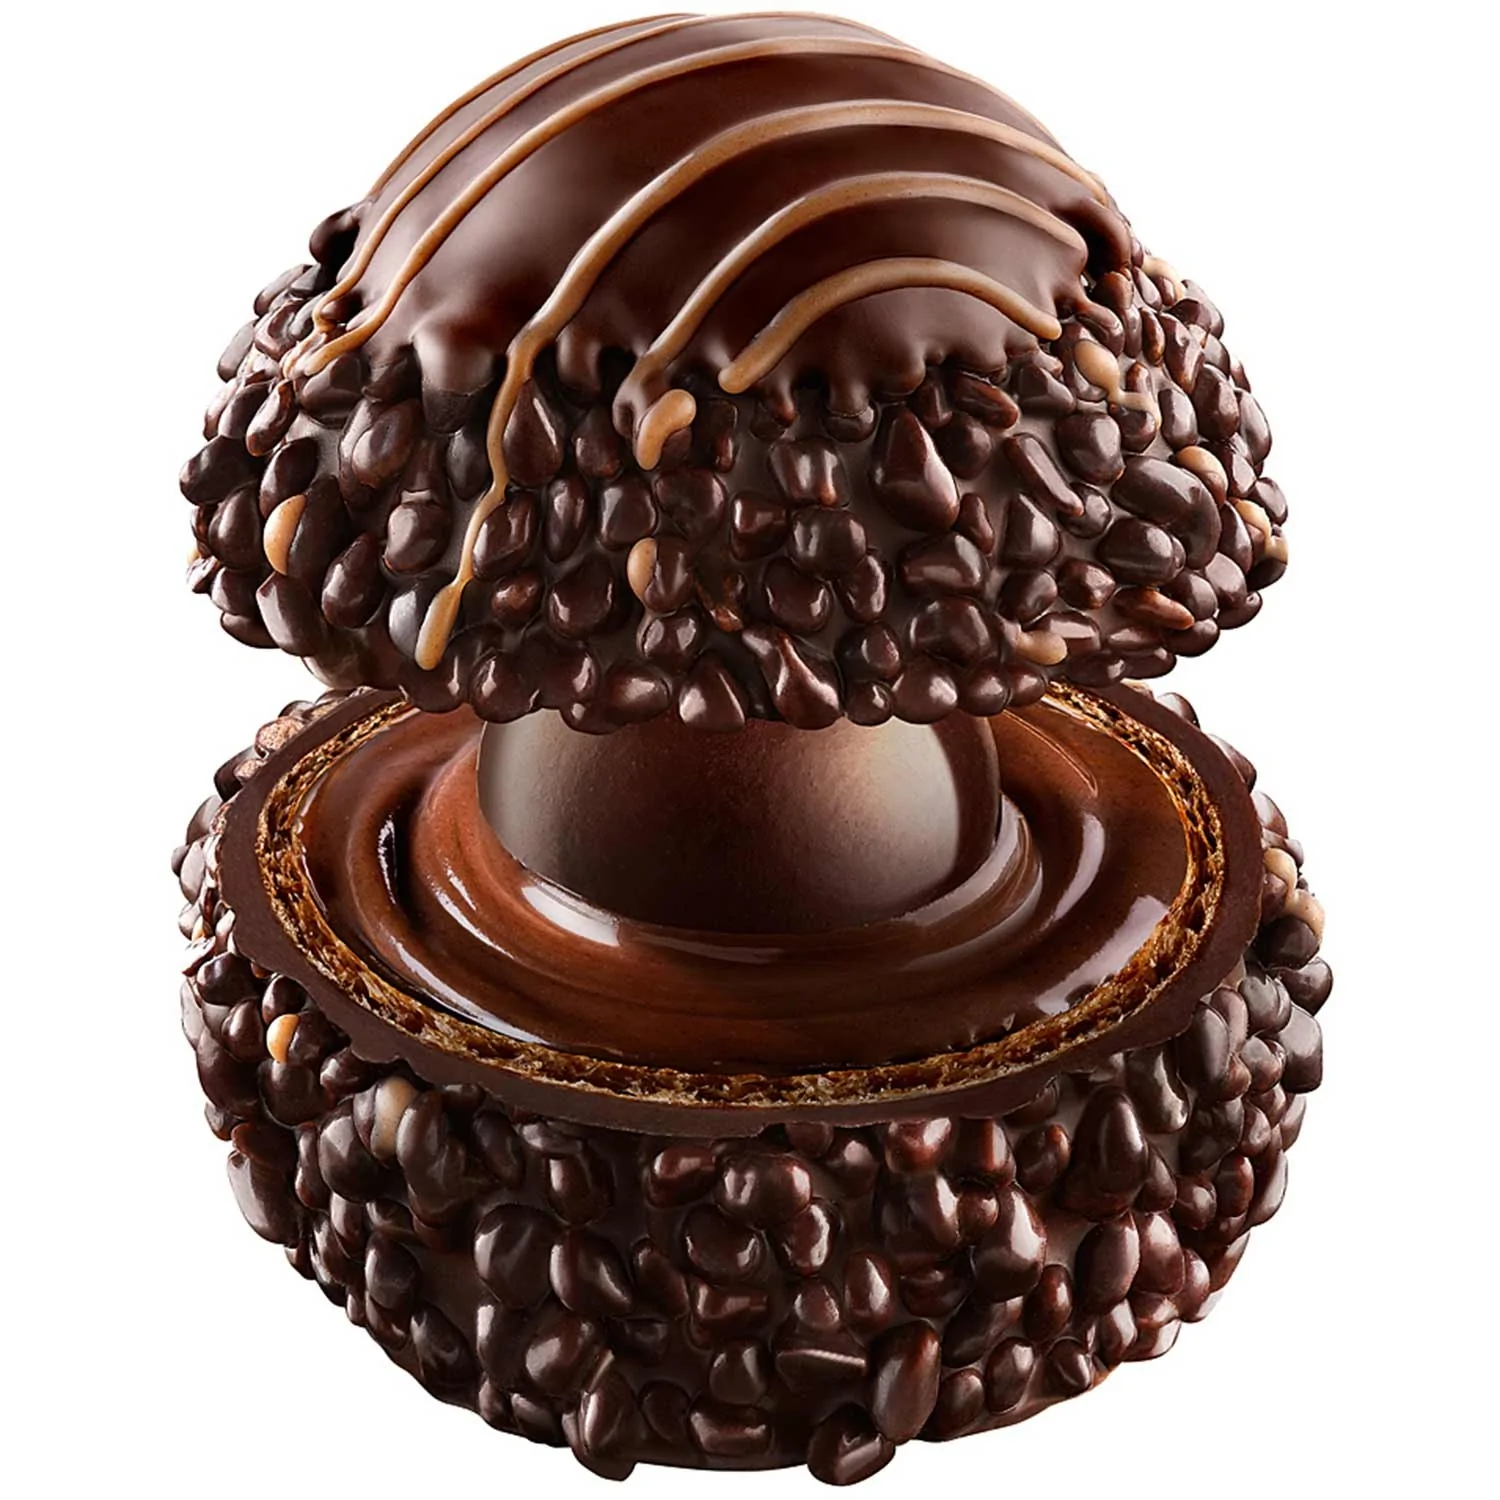 Ferrero rondnoir sachet de chocolat noir fin, 2,7 oz